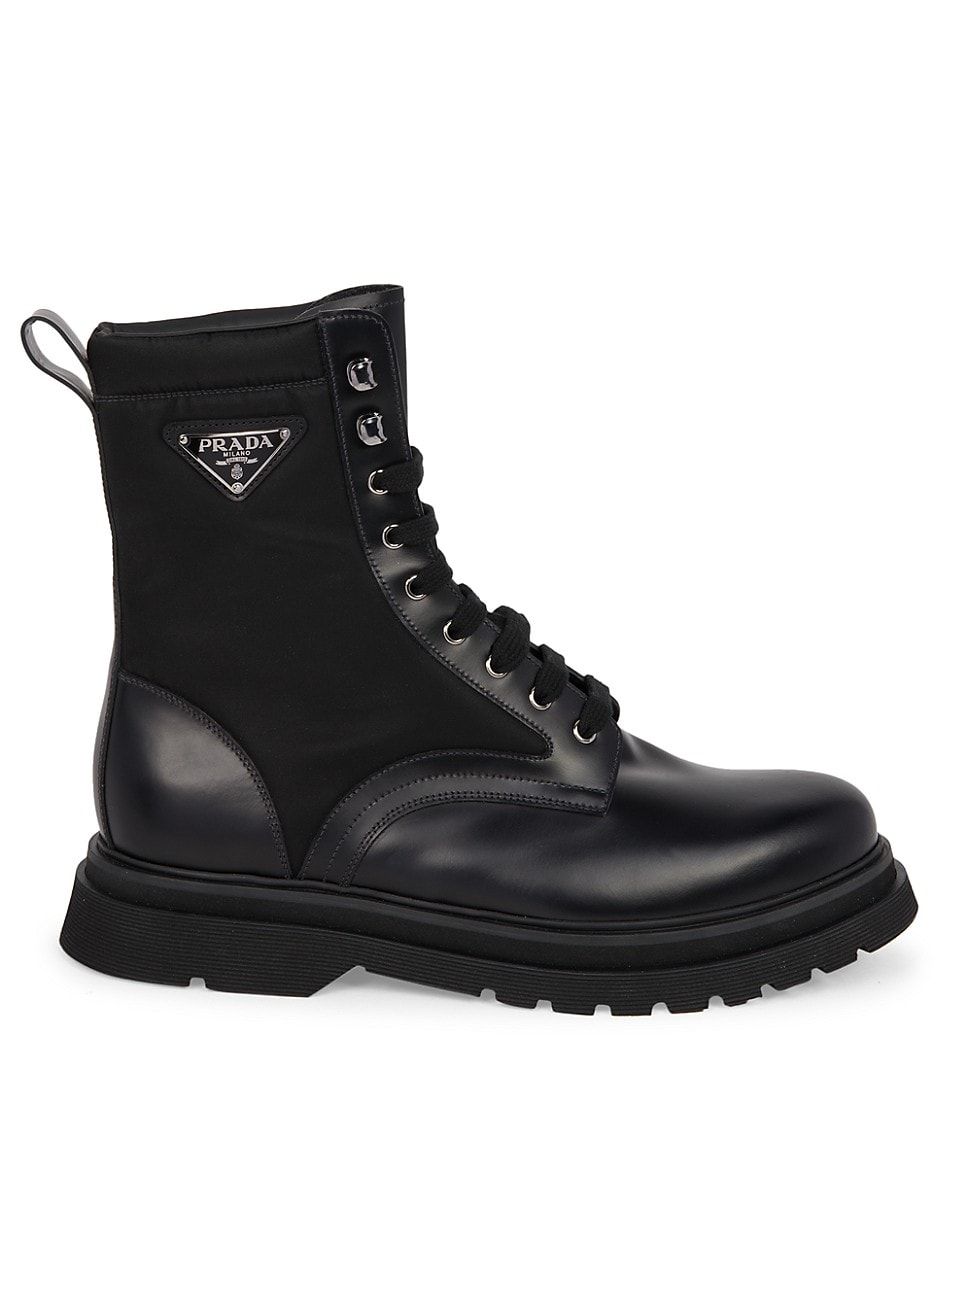 Prada Men's Millerighe Combat Boots - Nero - Size 10 | Saks Fifth Avenue